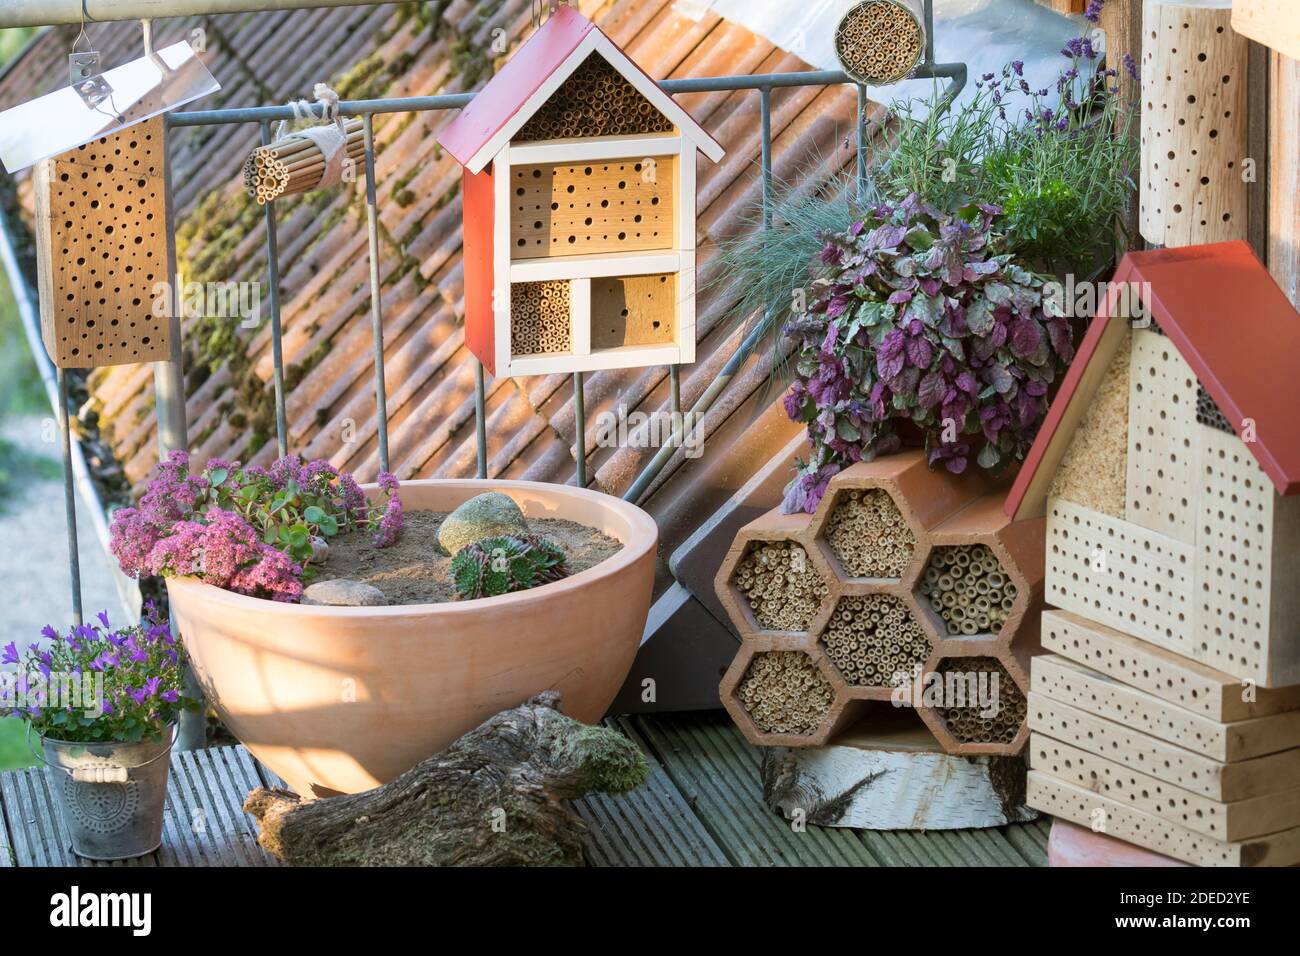 Ayudas de anidación de abejas salvajes en un balcón, madera dura con varios agujeros de perforación, Alemania Foto de stock